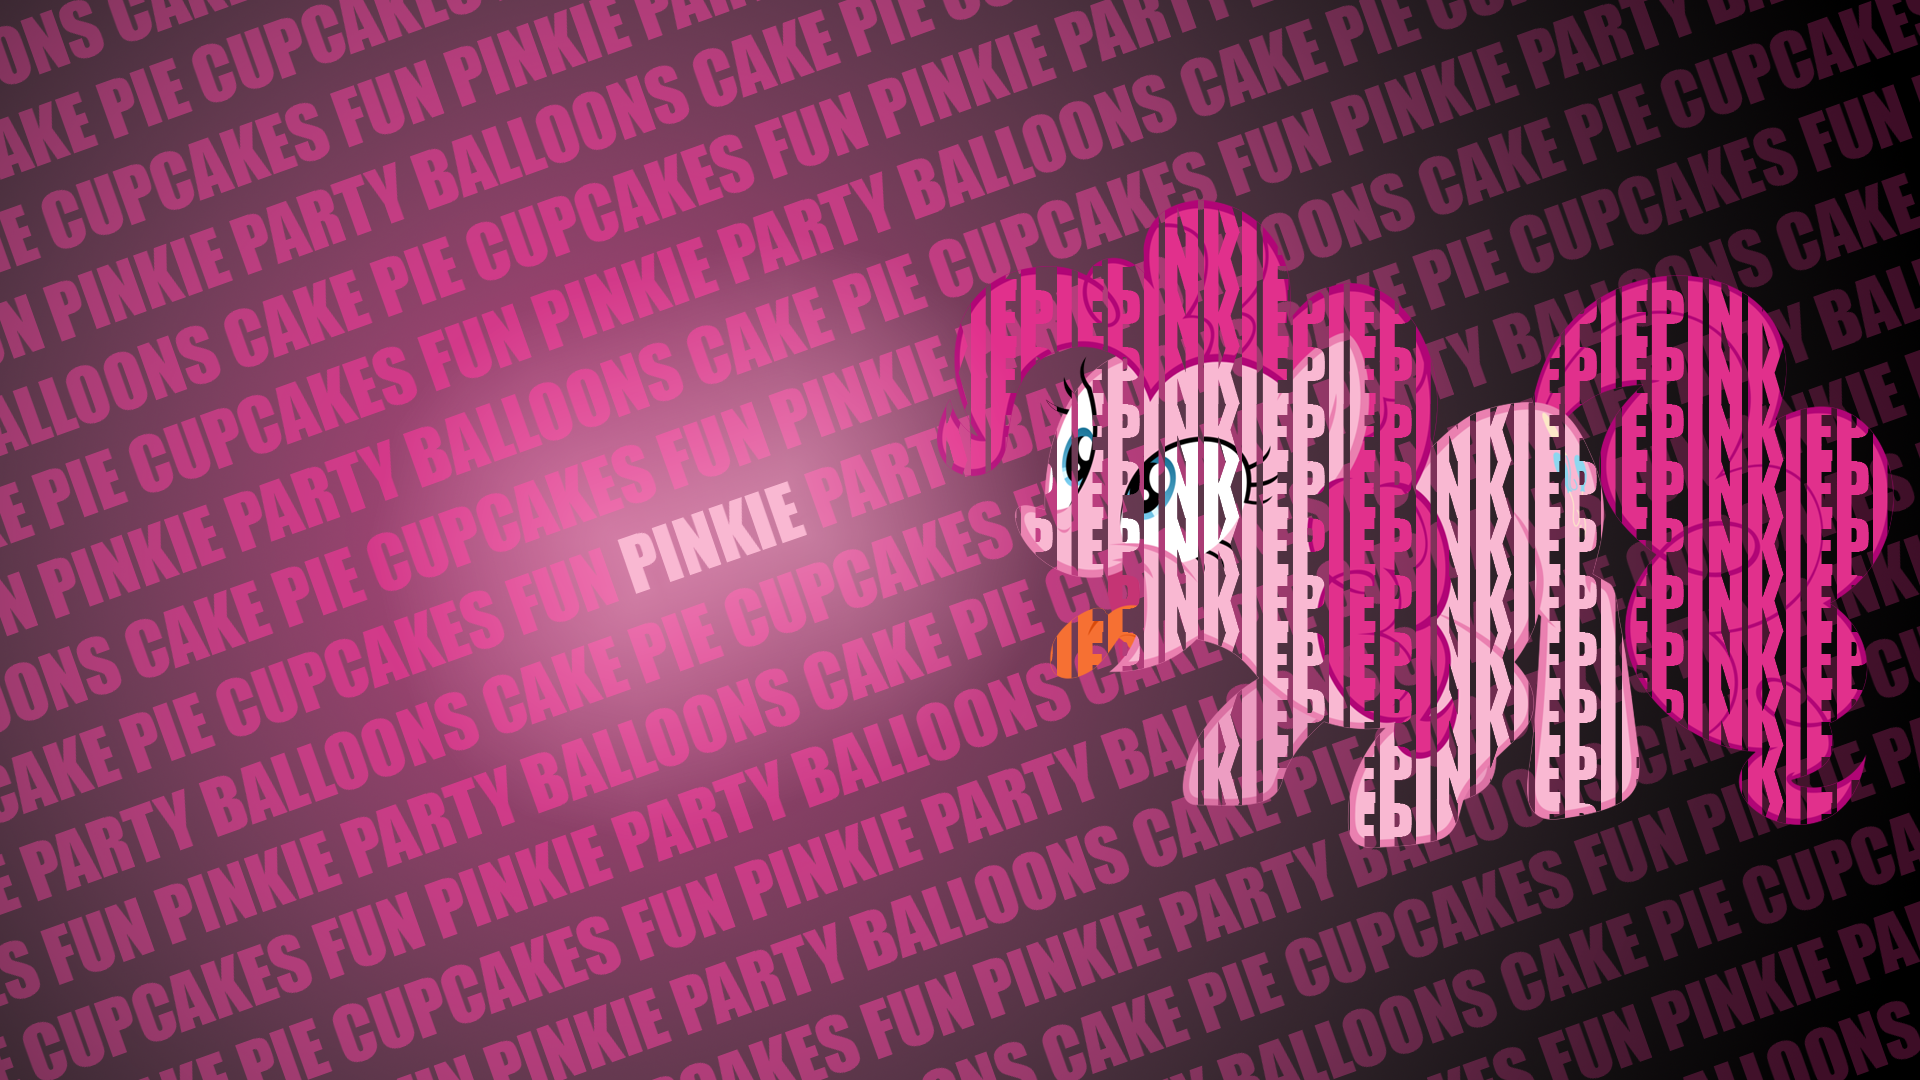 Pinkie Pie Typography [1920x1080] by CoRnFlAkEs369